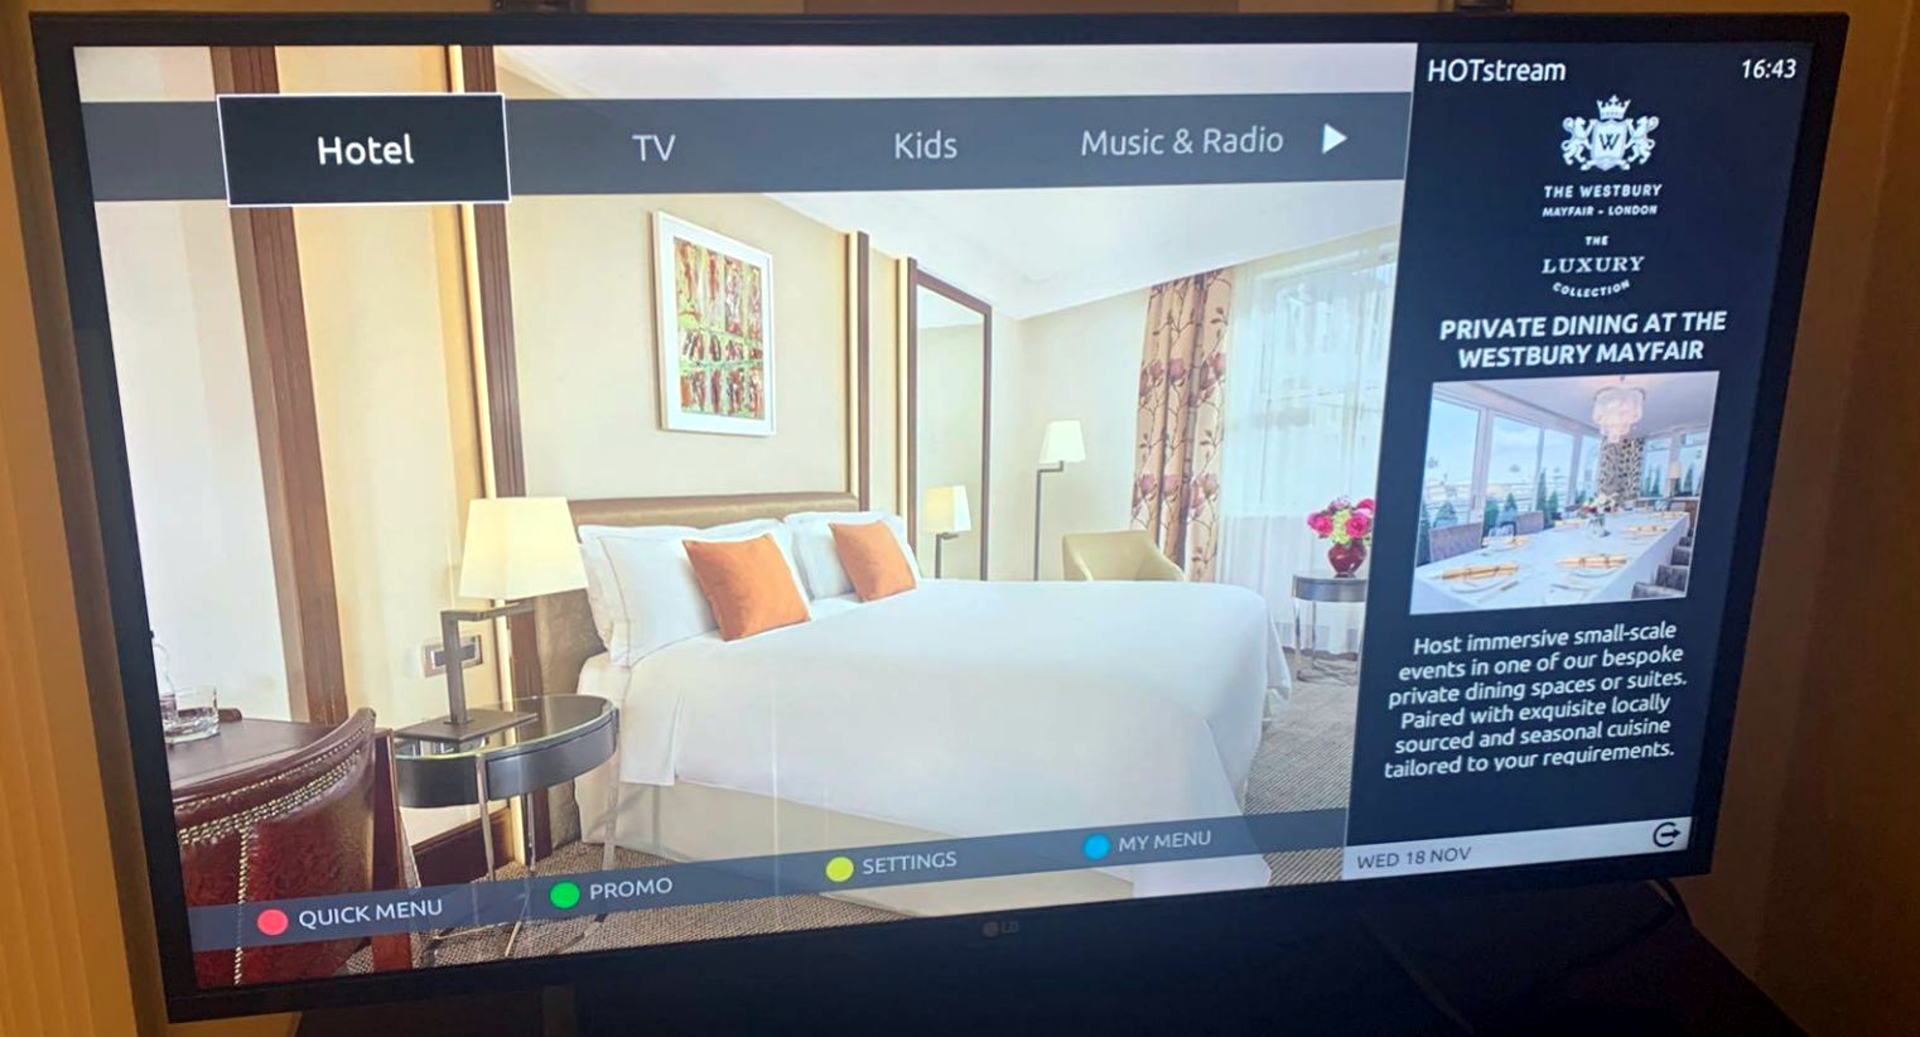 LG 40LX761H 40" 1080p Full HD Smart Hotel LED Backlit LCD Flat Panel Display TV wall mounted Width